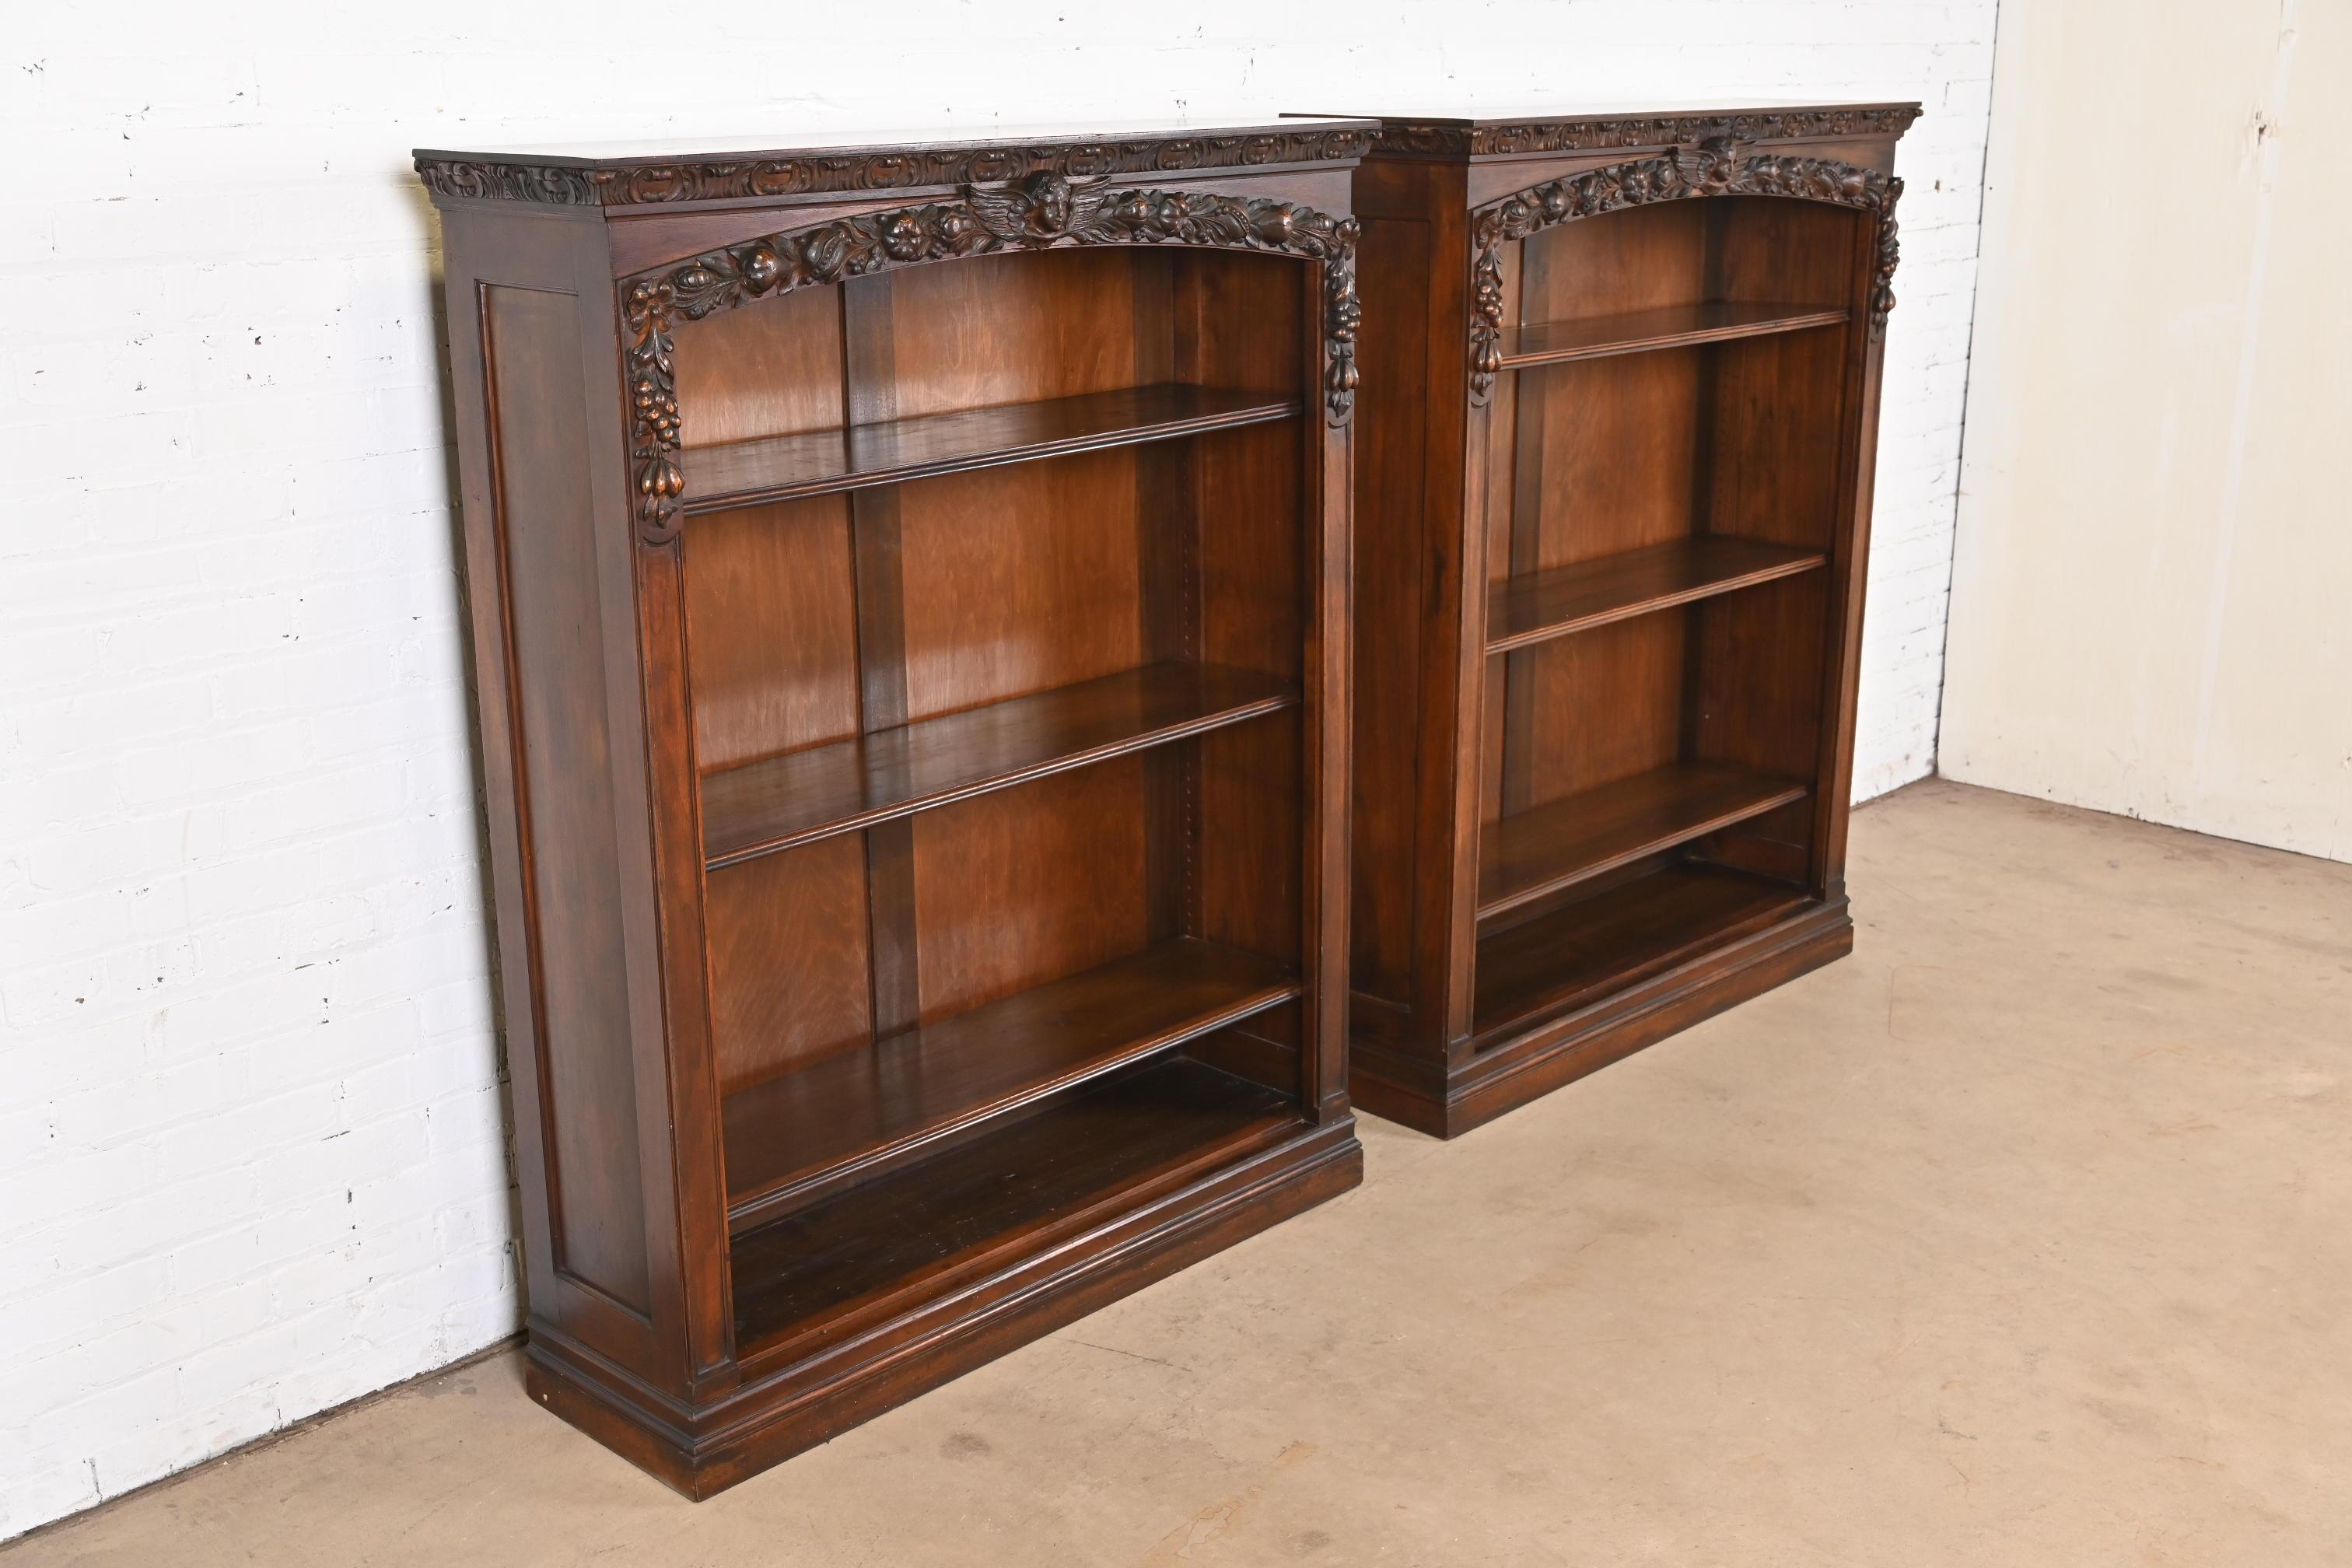 R.J. Horner Style Antique Victorian Renaissance Revival Carved Walnut Bookcases For Sale 1